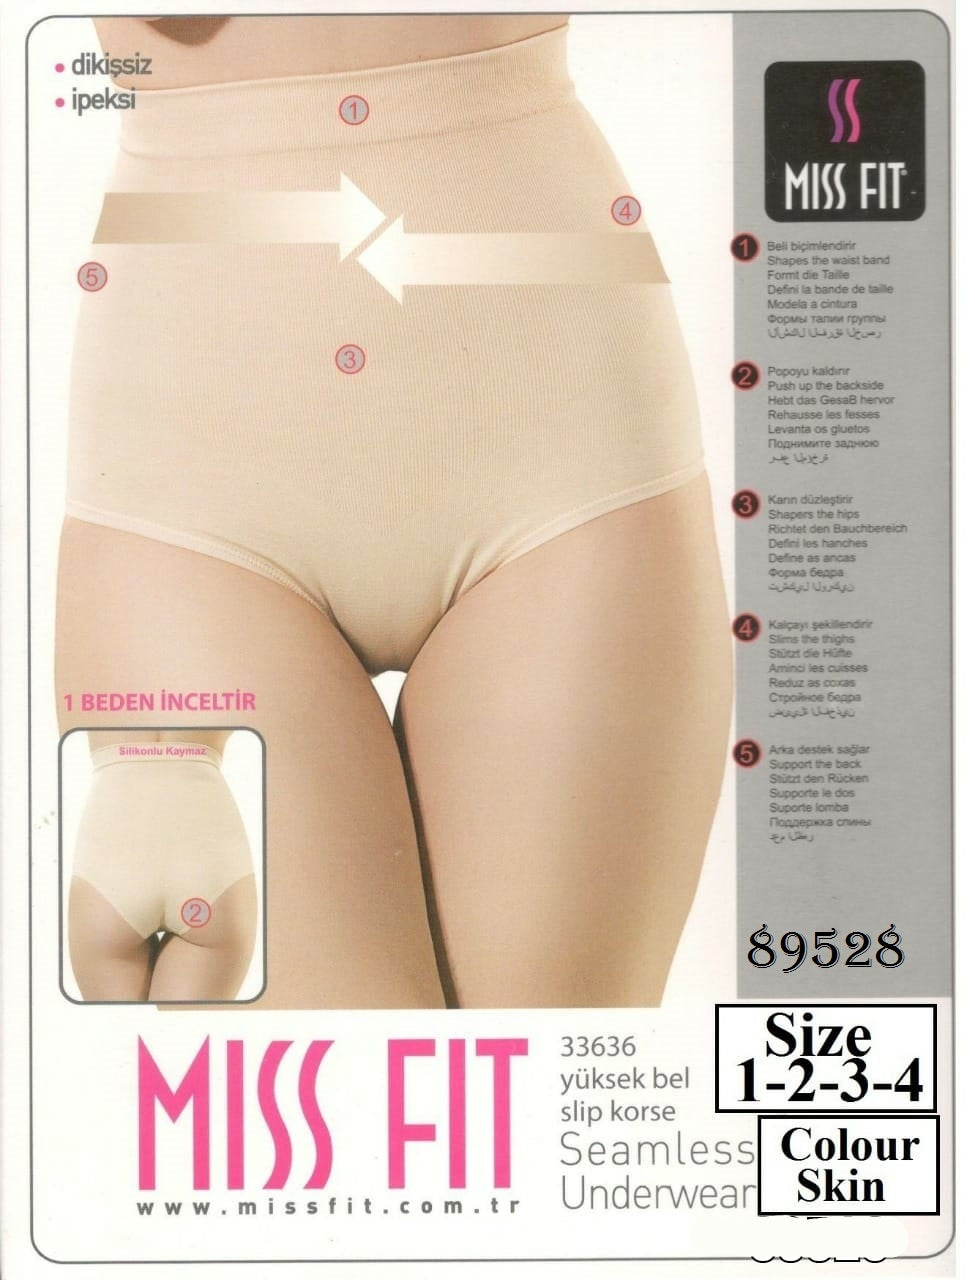 Reviews of Miss Fit Body Korse Seamless Body Shaper, Underwear